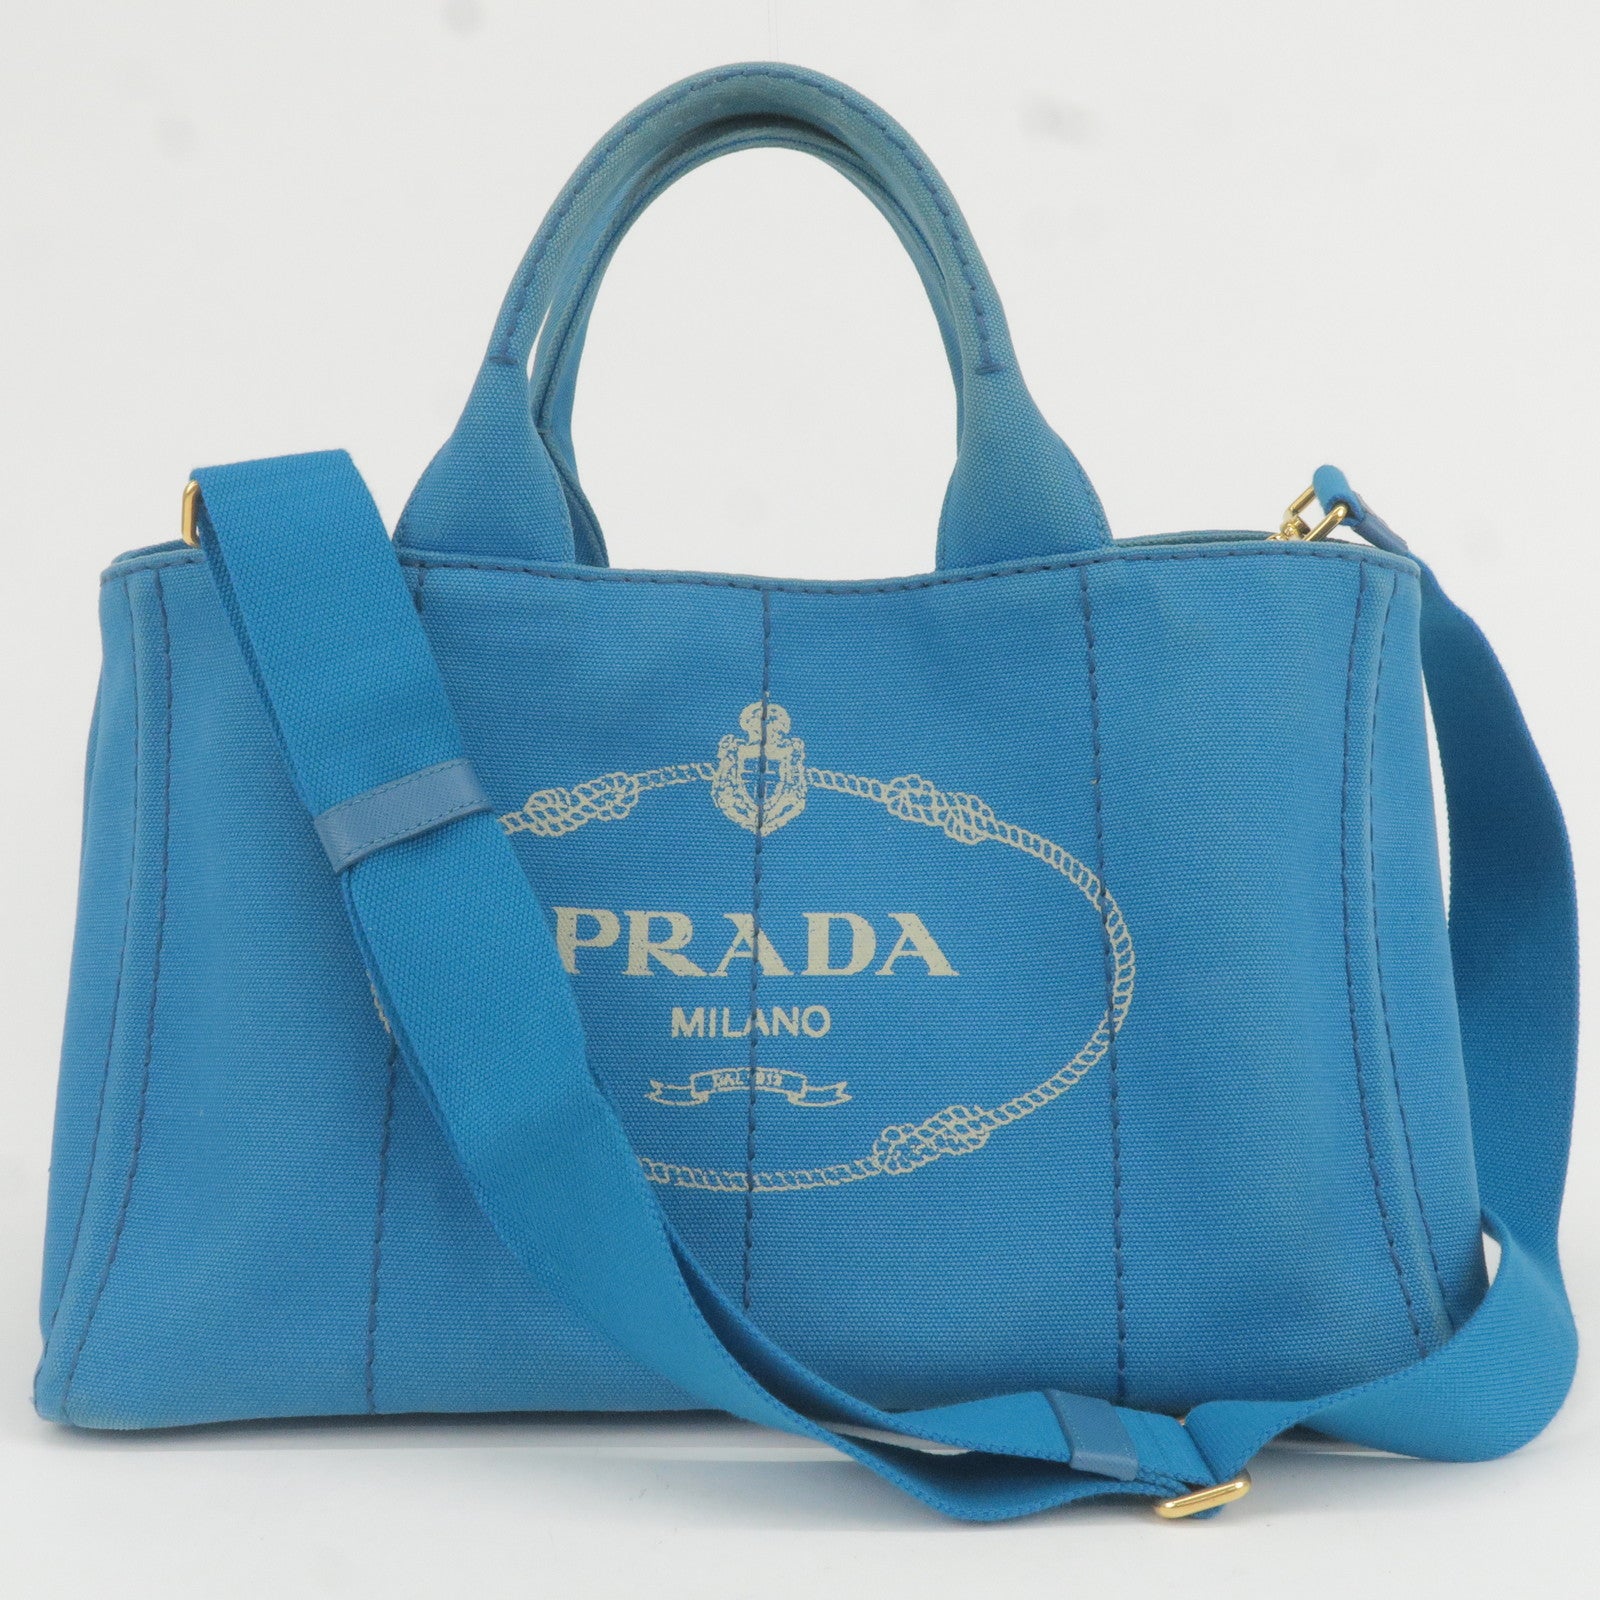 Prada Mini Logo Sequin & Leather Tote on SALE